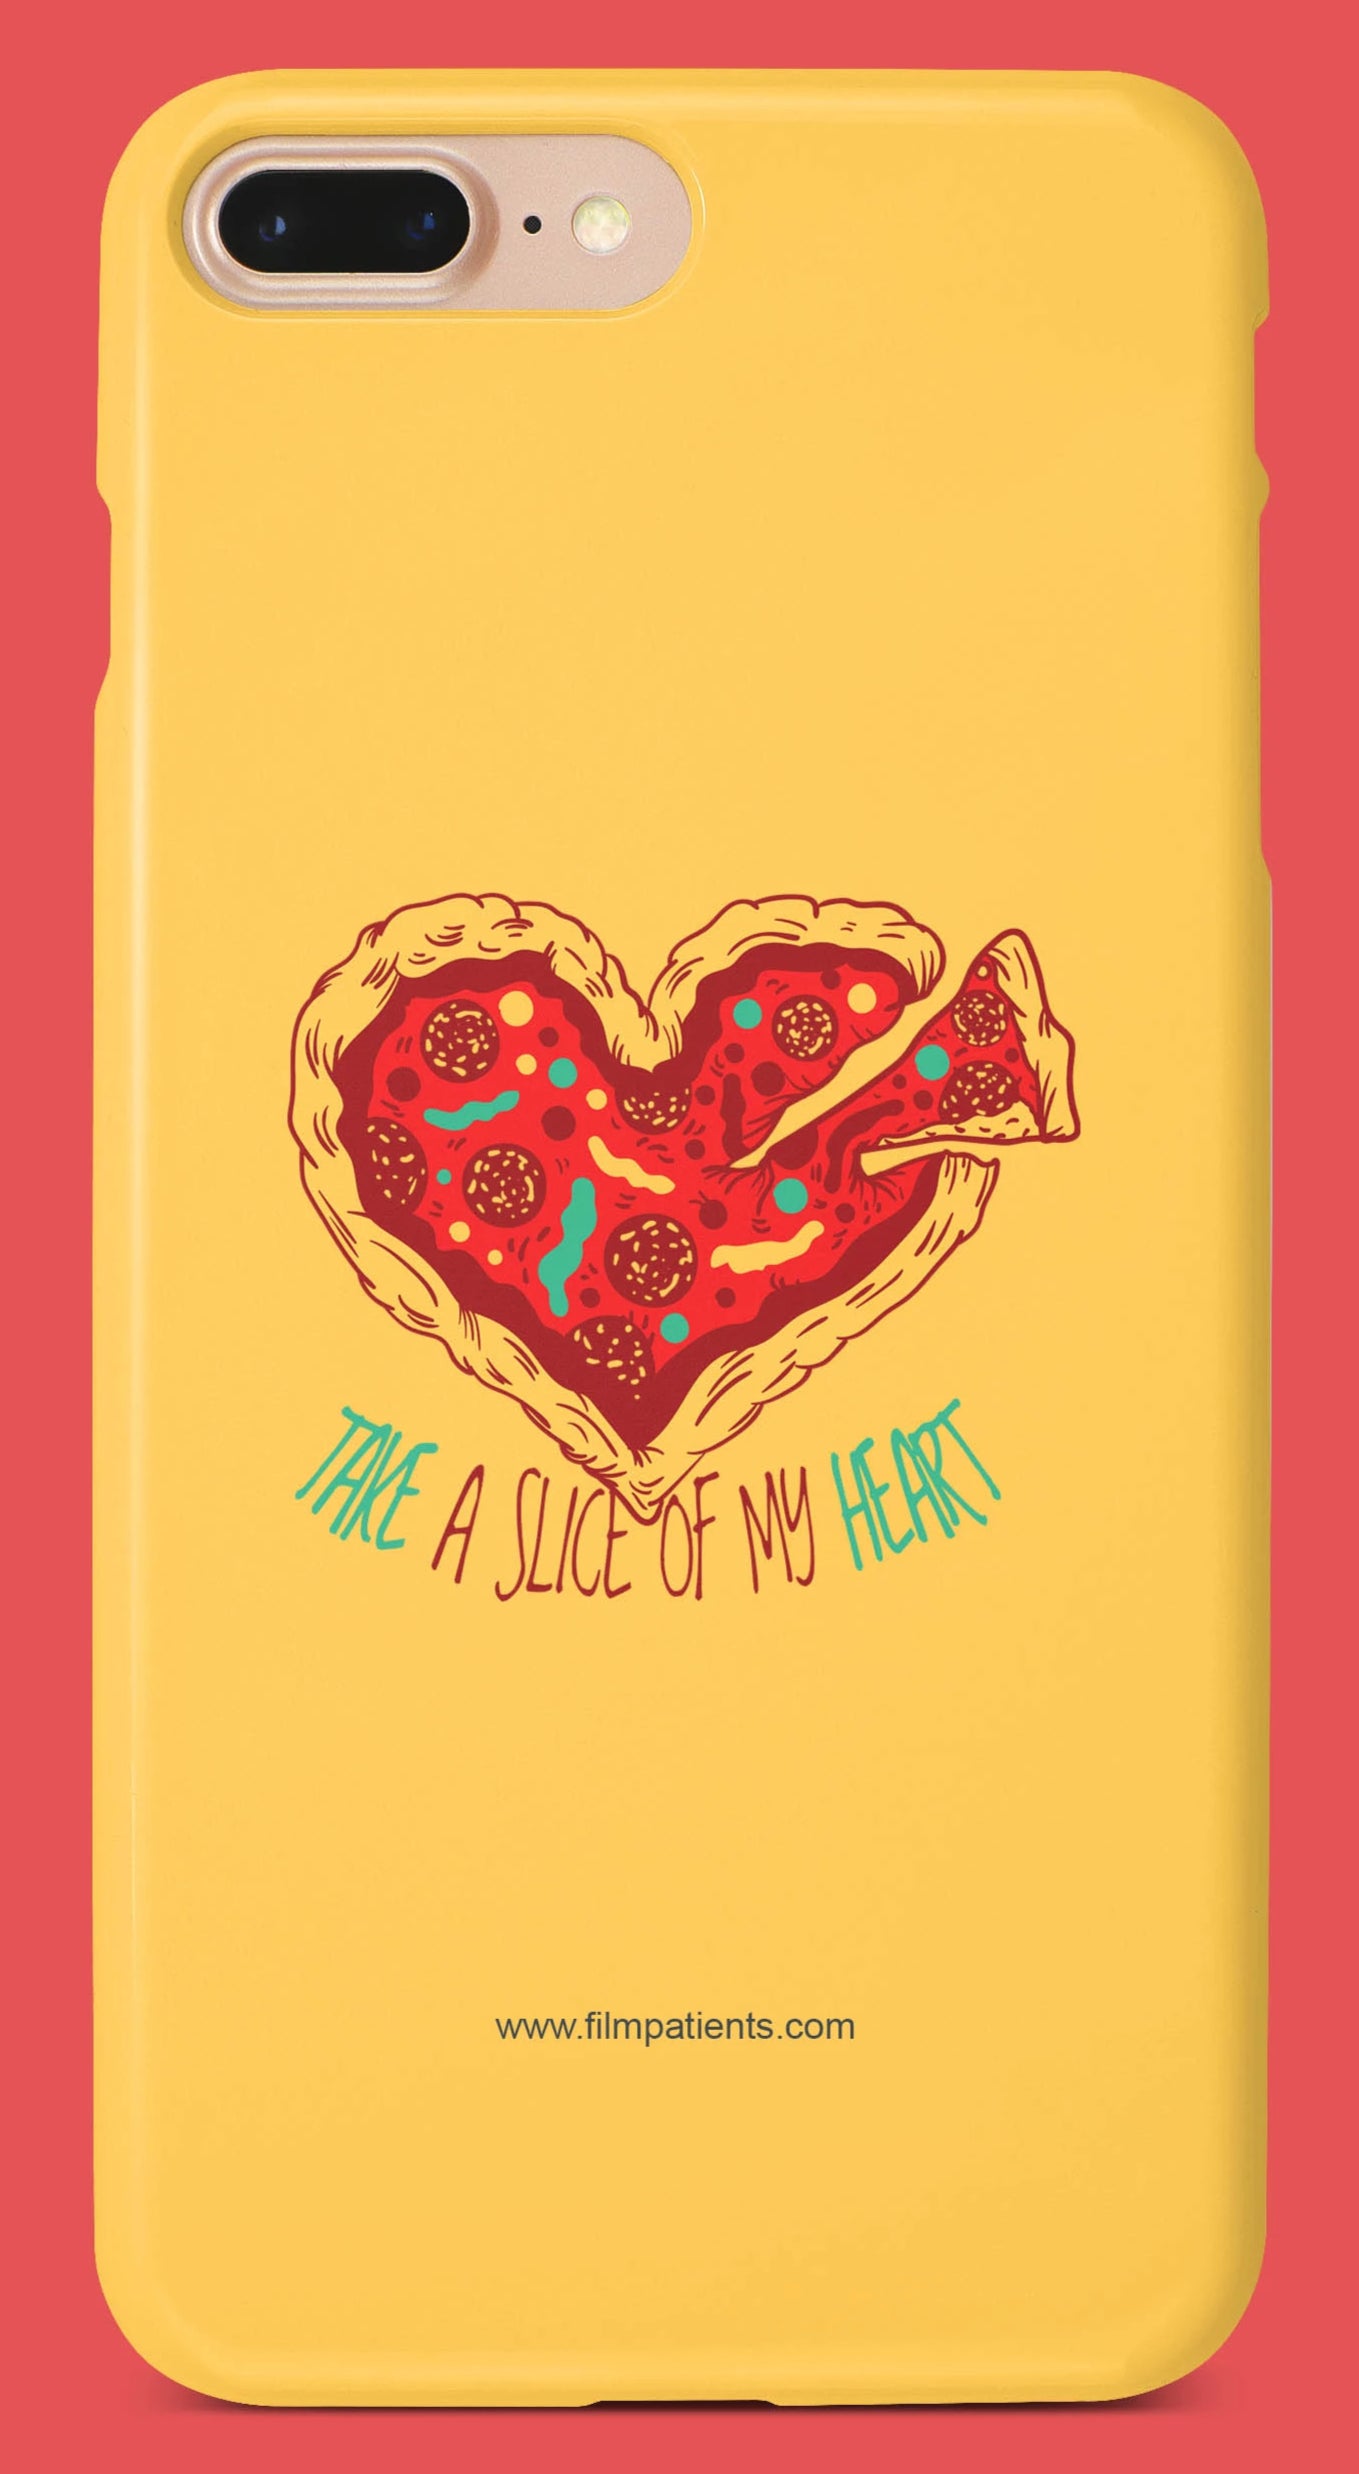 Pizza Love Mobile Cover | Film Patients